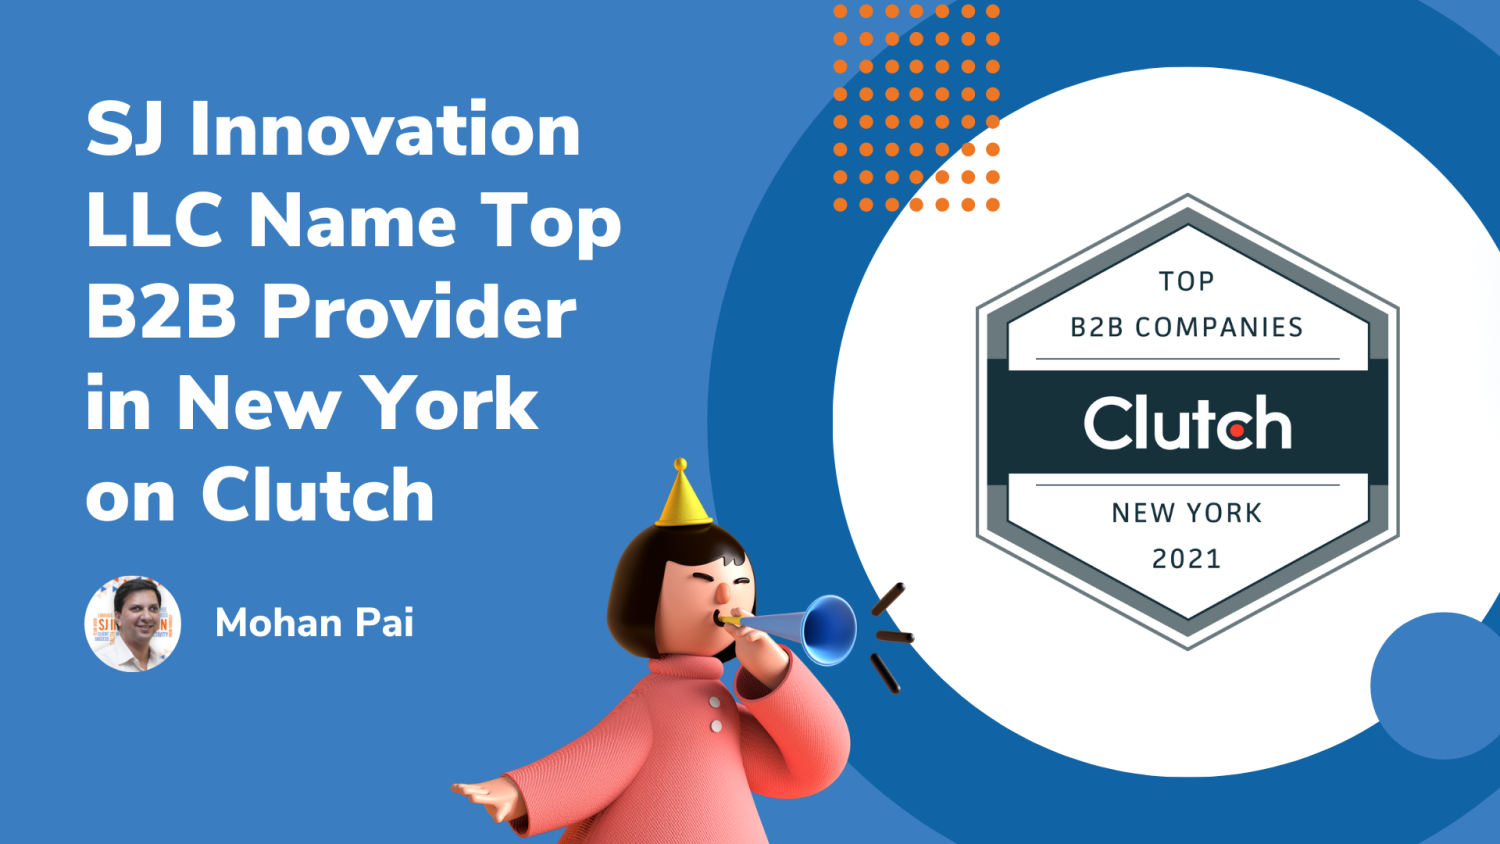 SJ Innovation LLC Name Top B2B Provider in New York on Clutch